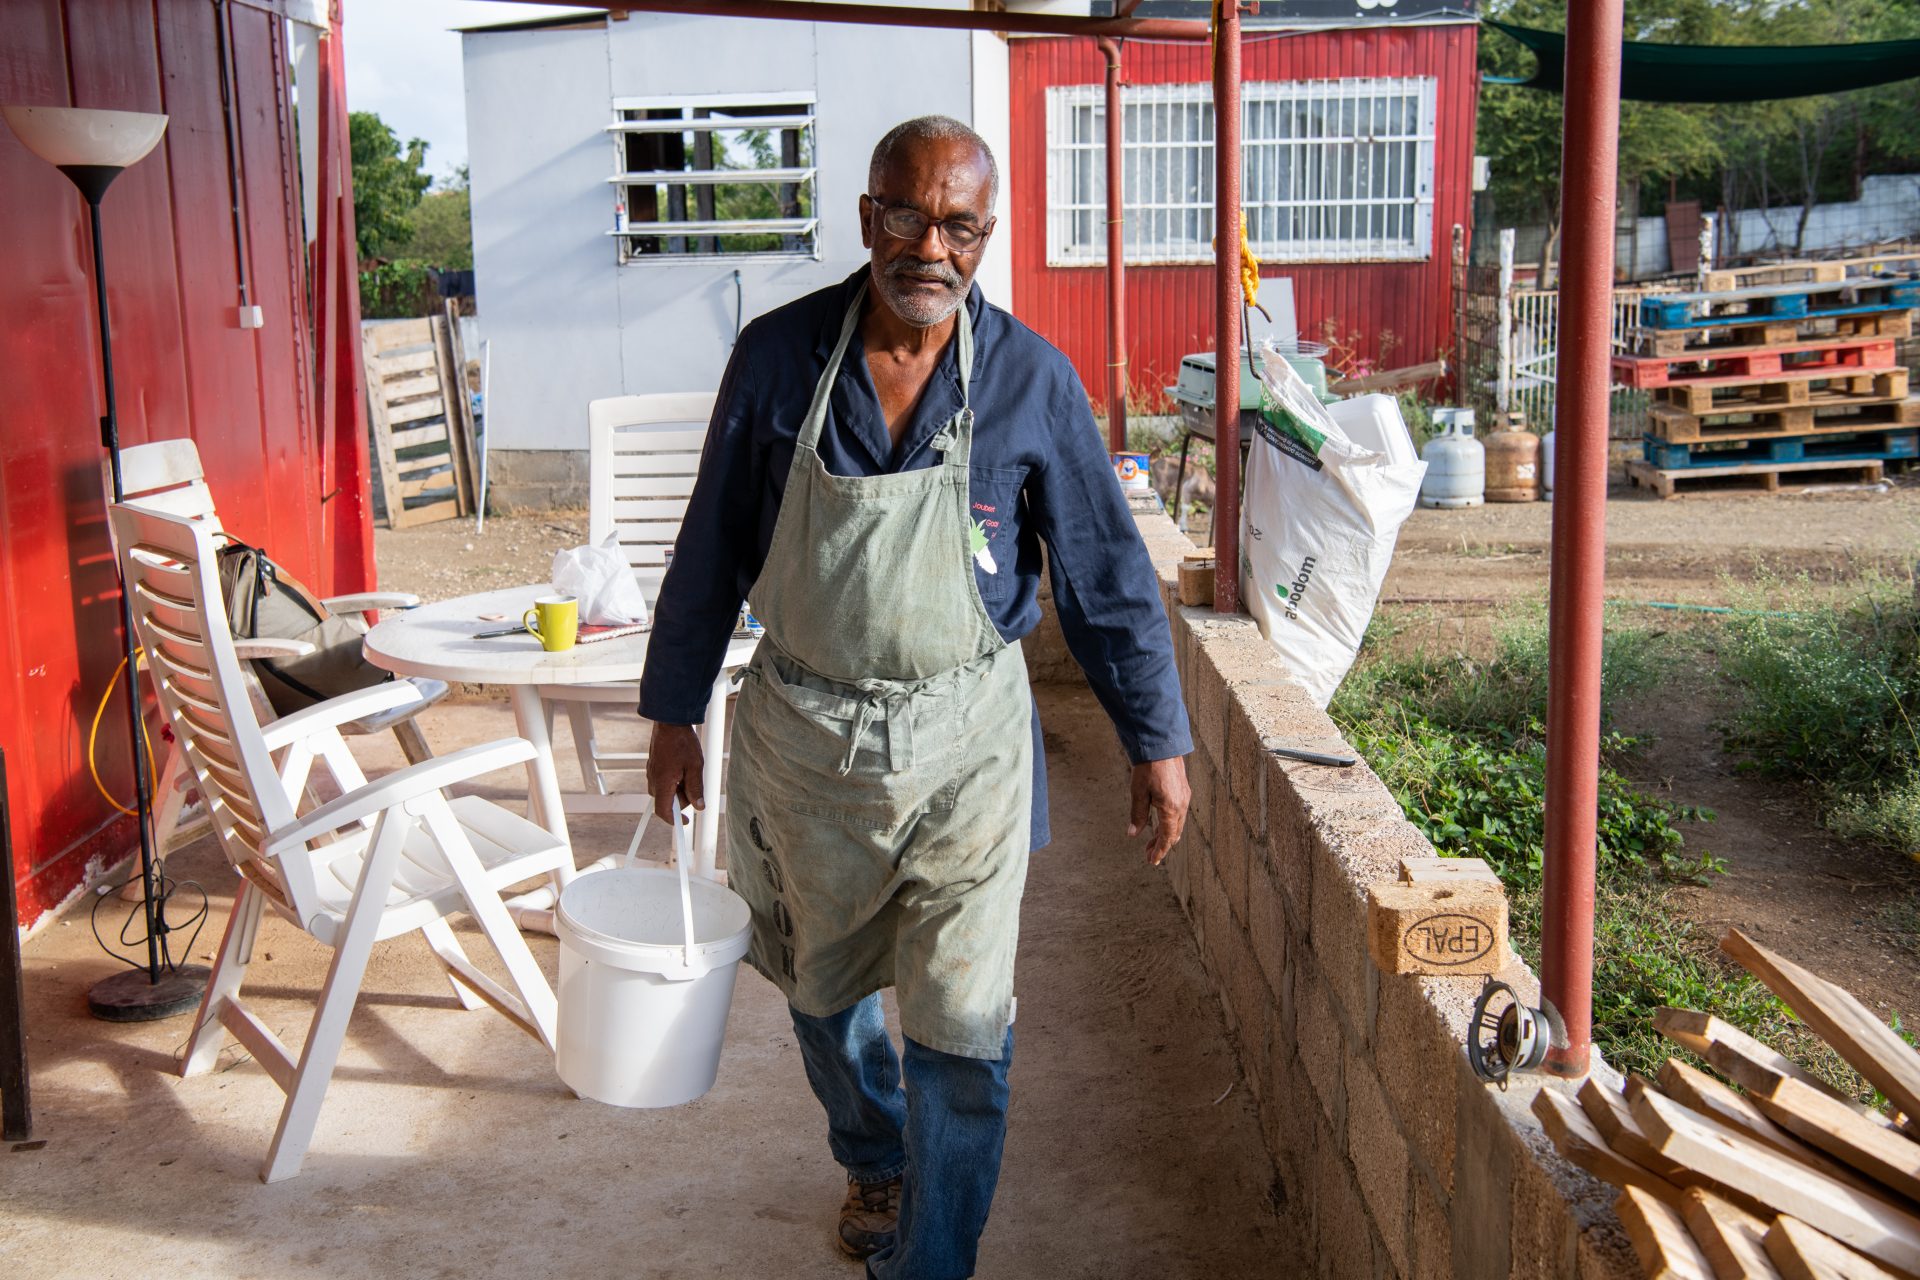 Older man is walking around a farm holding a white bucket